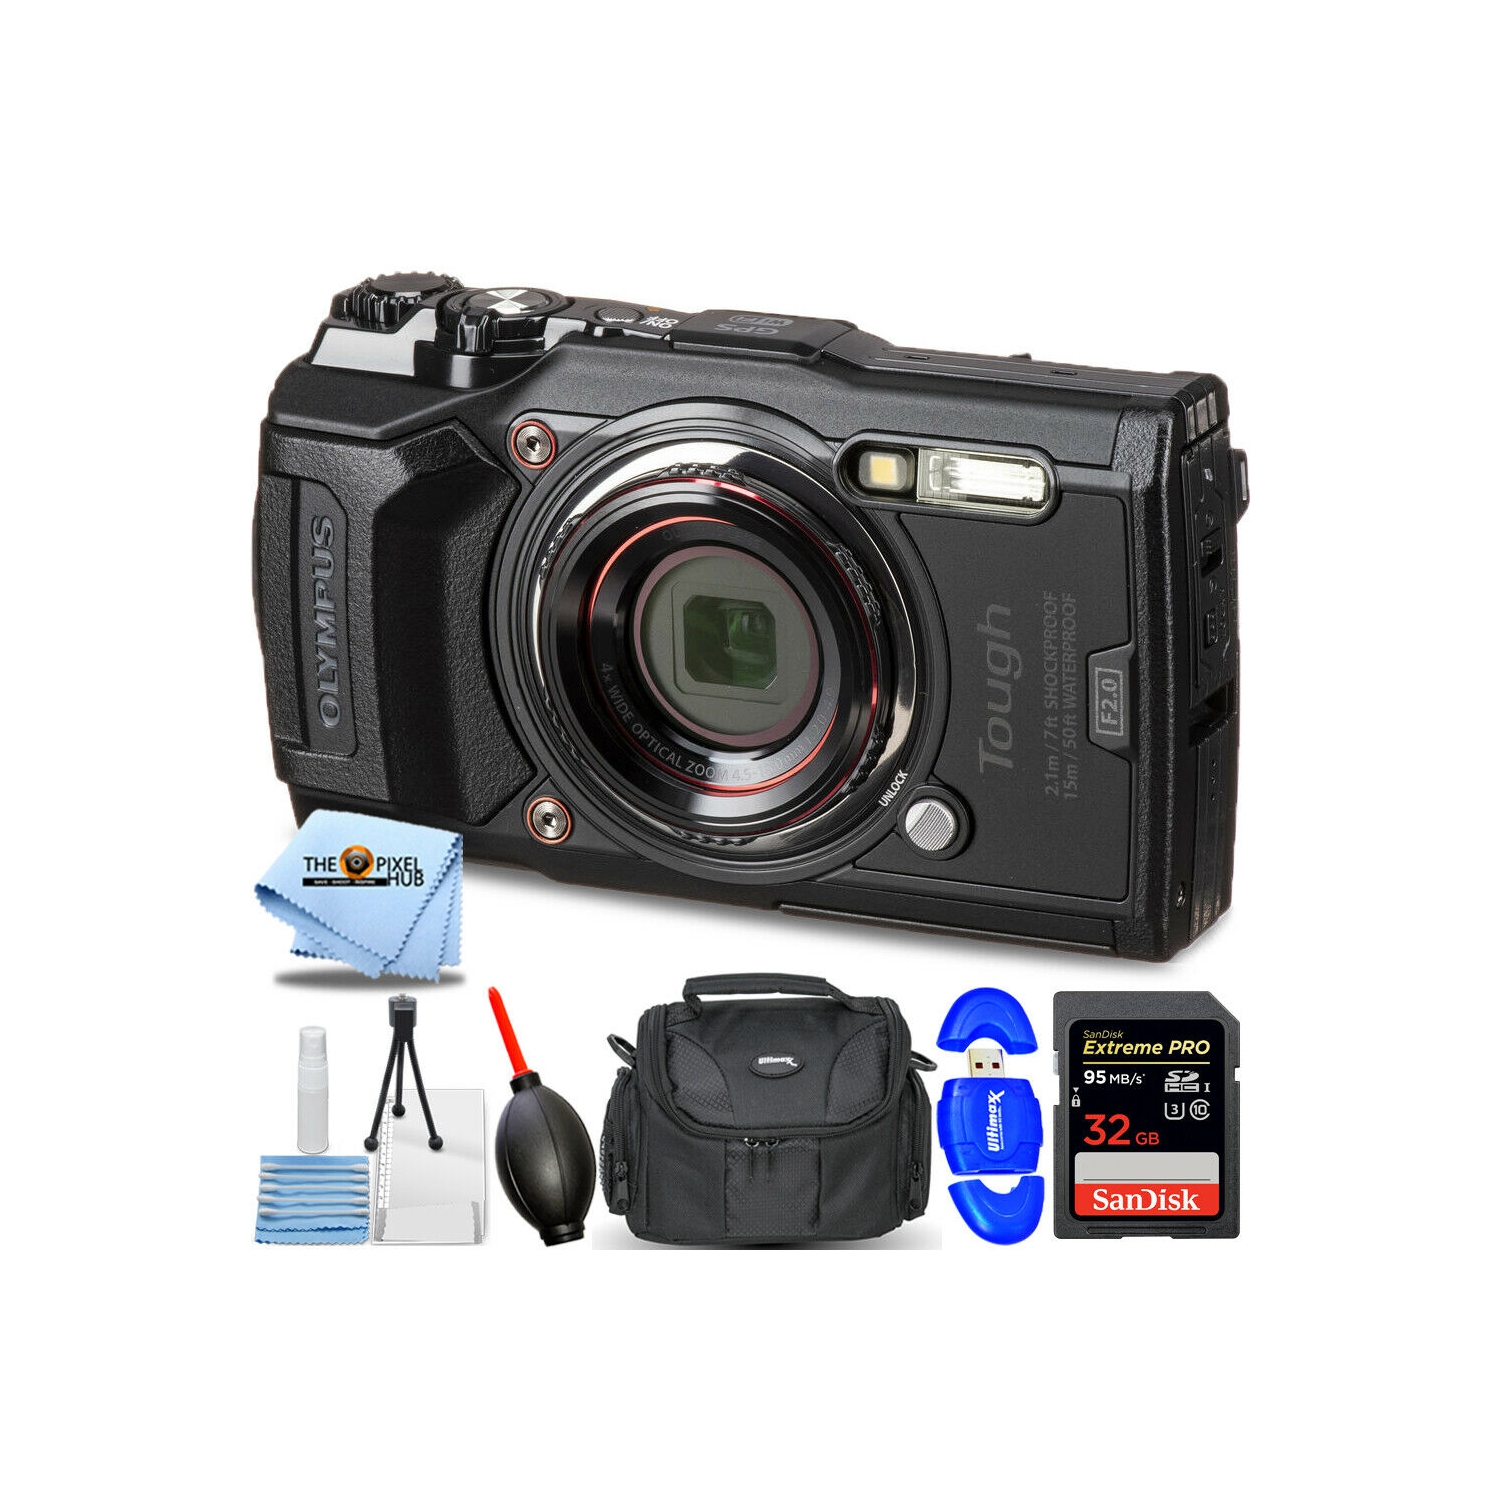 Olympus Tough TG-6 Waterproof Digital Camera (Black) - 7PC Accessory Bundle